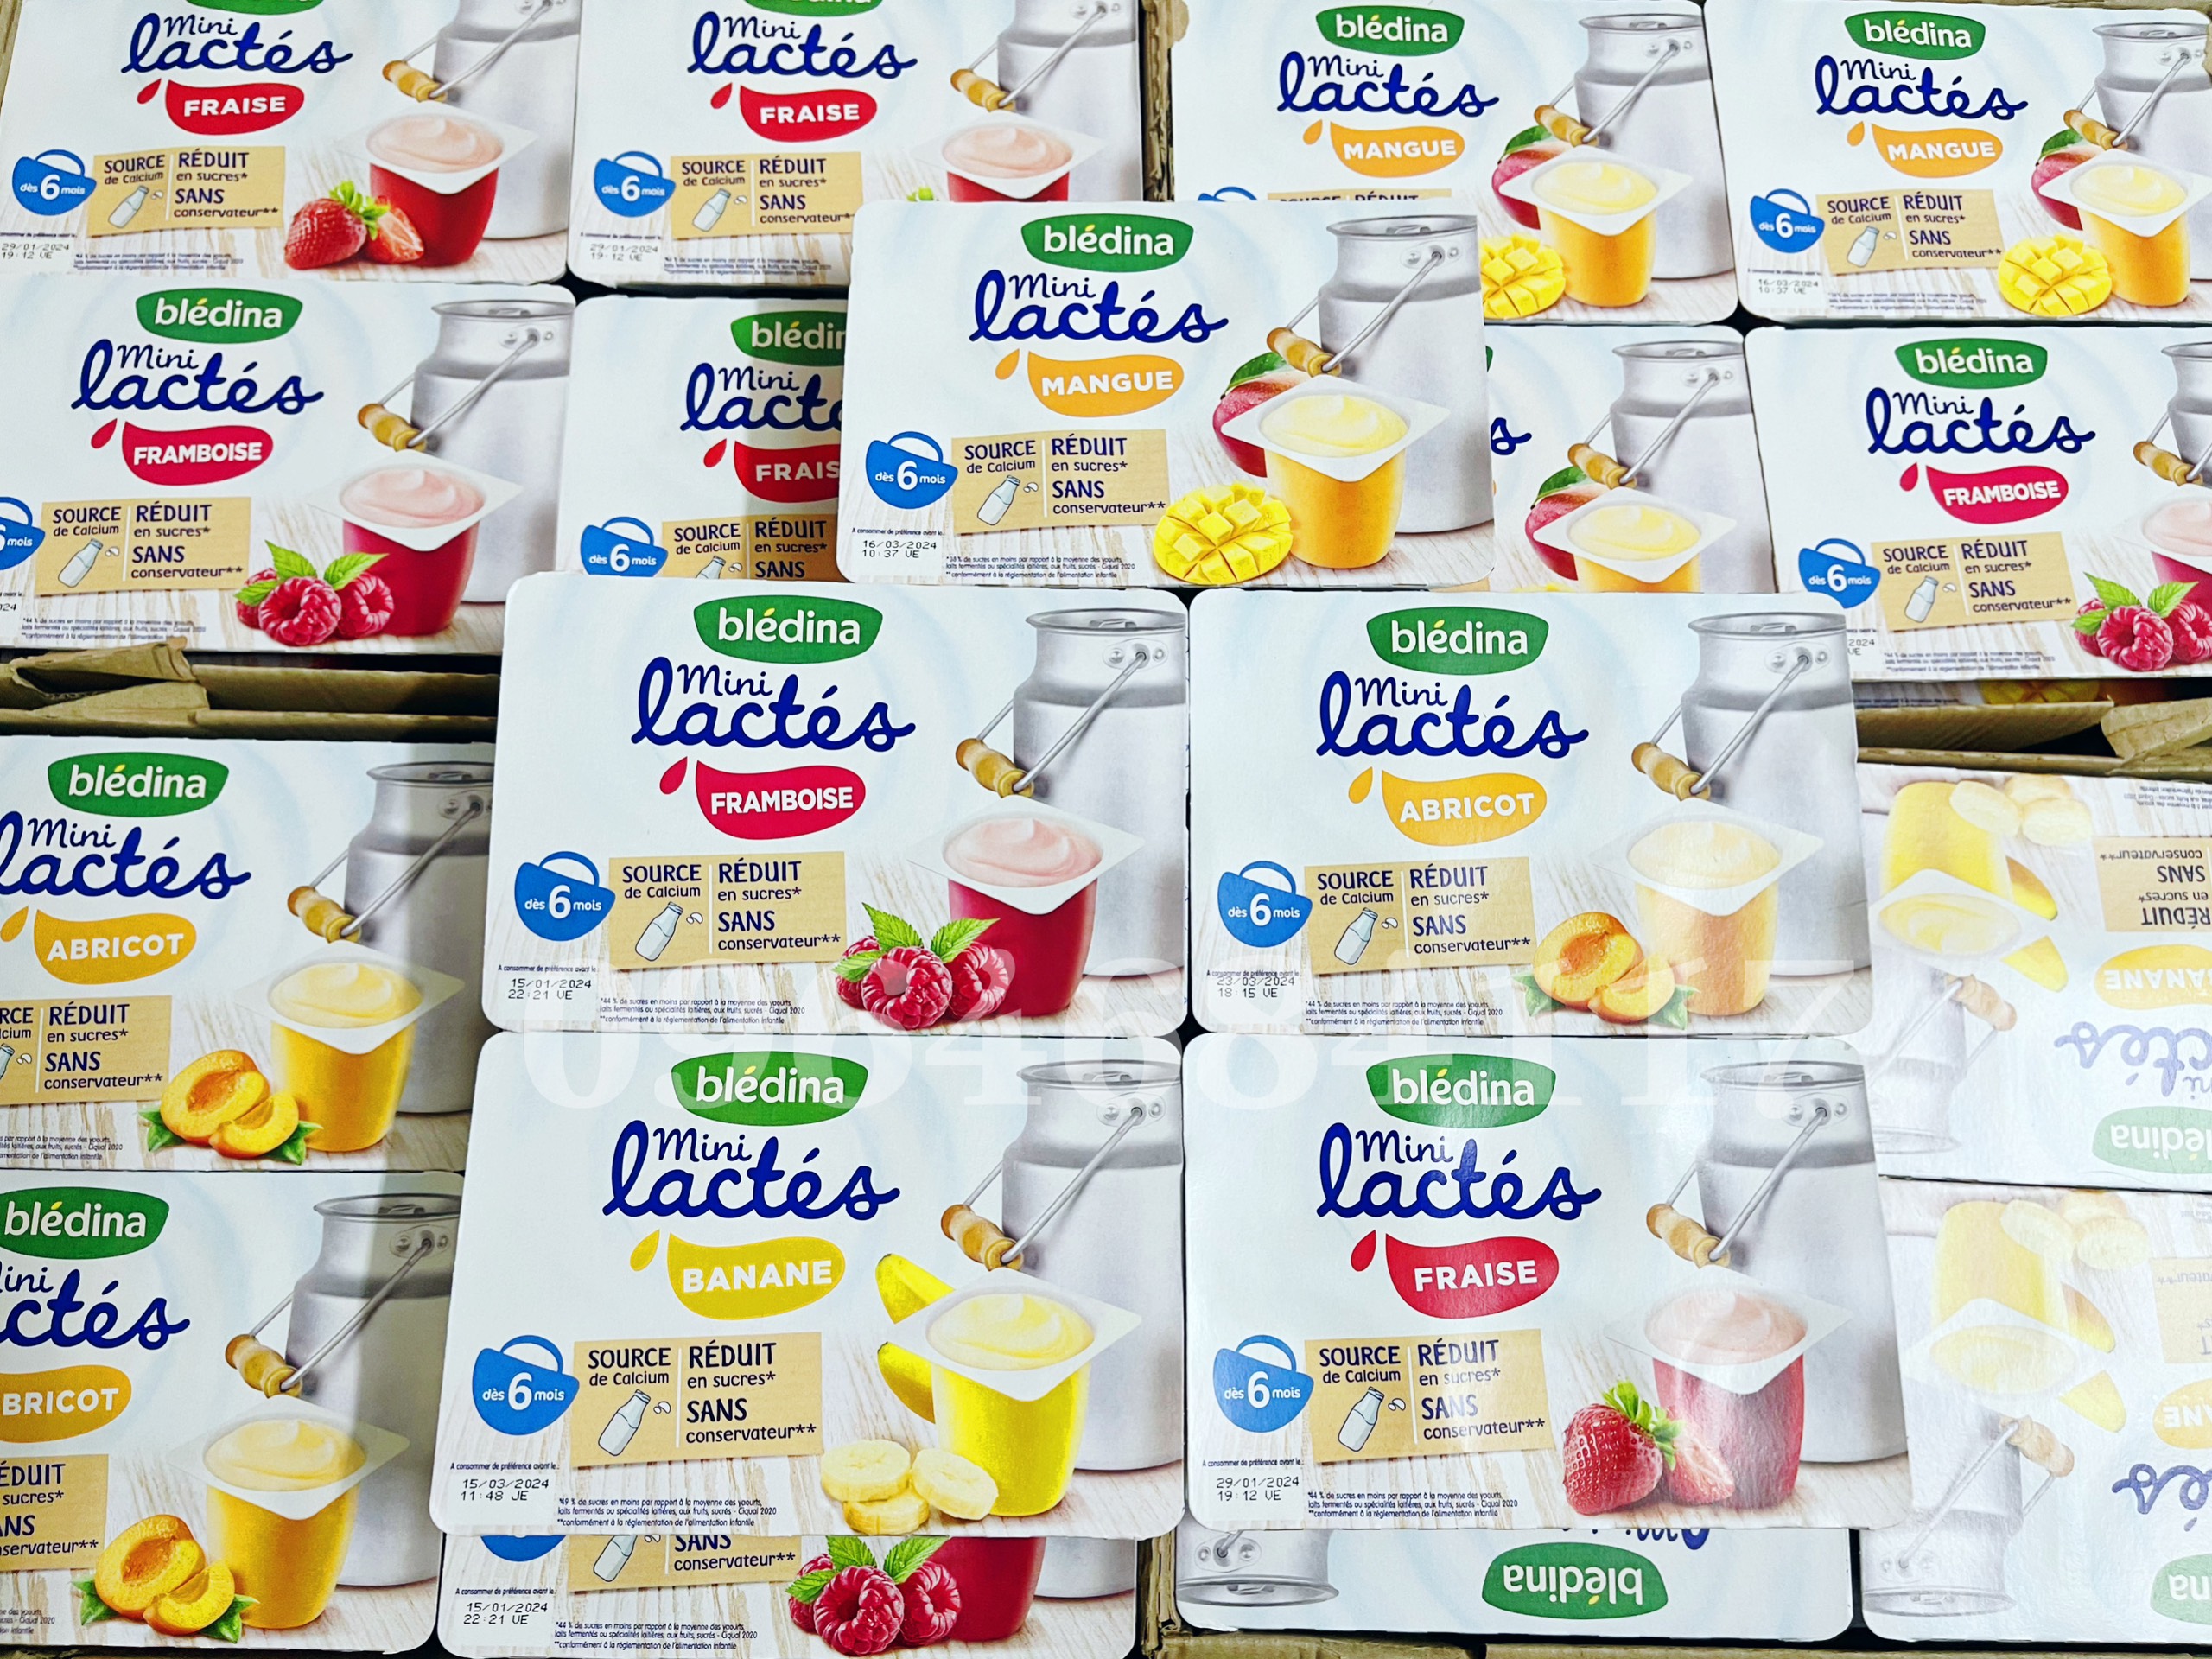 Date T7 24- Sữa chua Bledina Nestle vỉ 6 hộp của Pháp